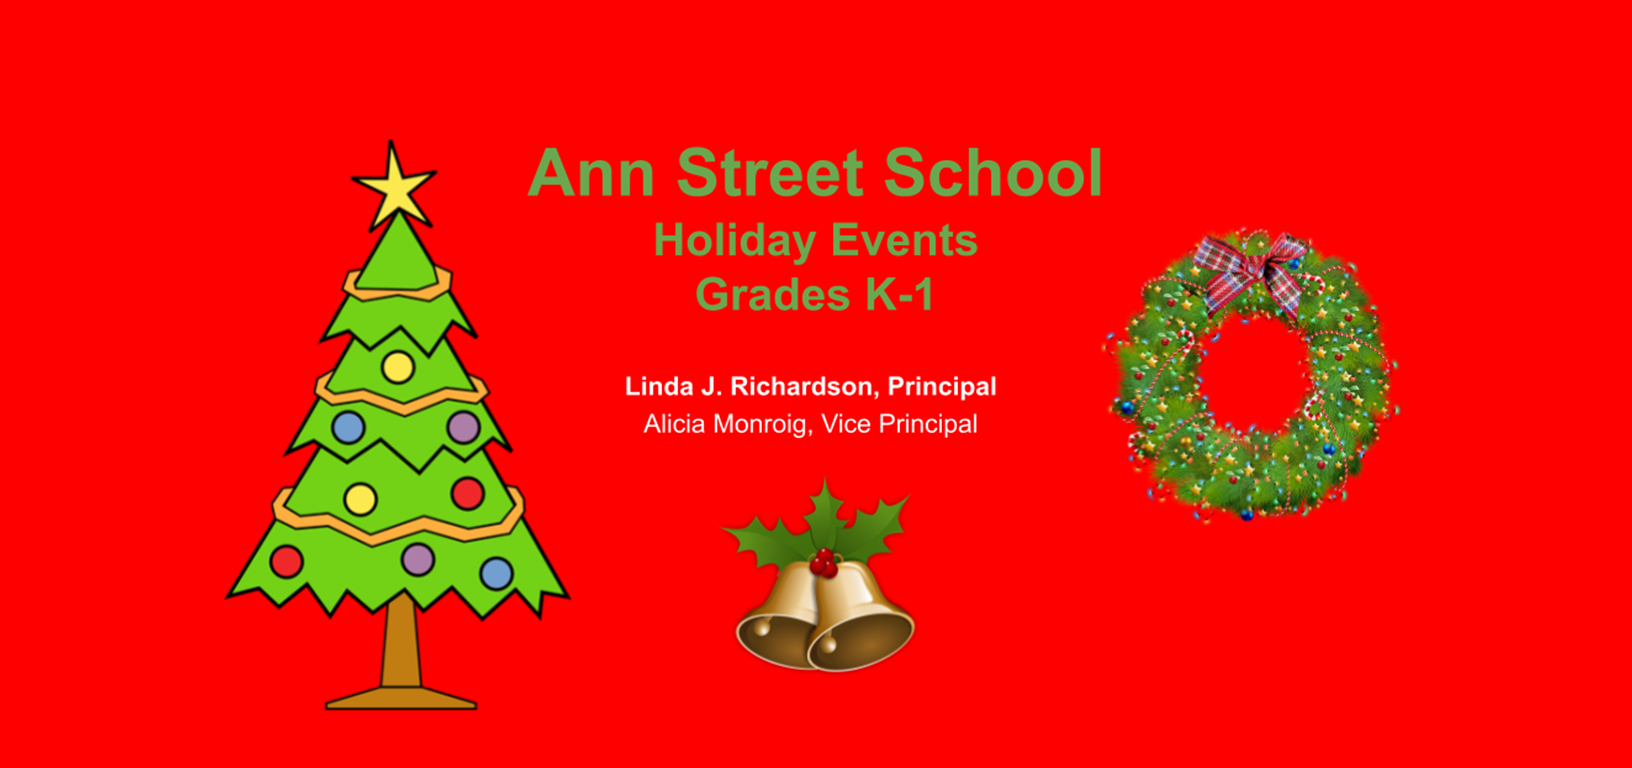 Ann Street School Holiday Events Grades K-1